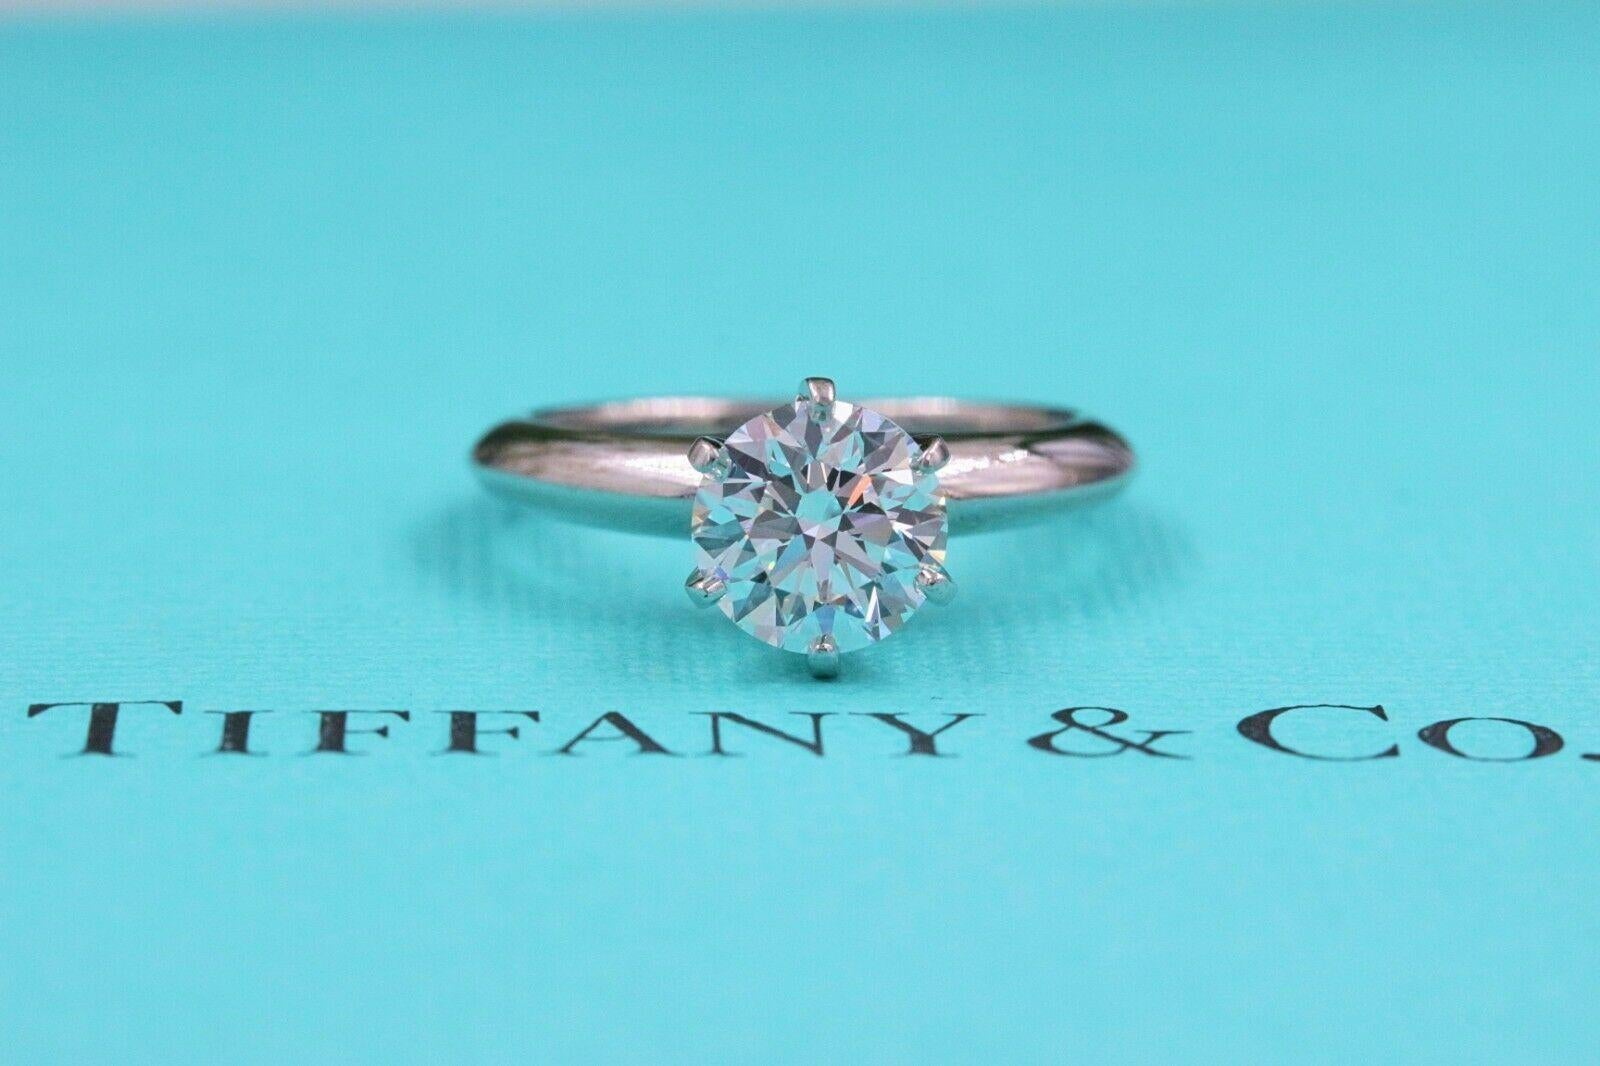 Tiffany & Co. Round Diamond Engagement Ring 1.23 Carat GVS2 Platinum For Sale 4